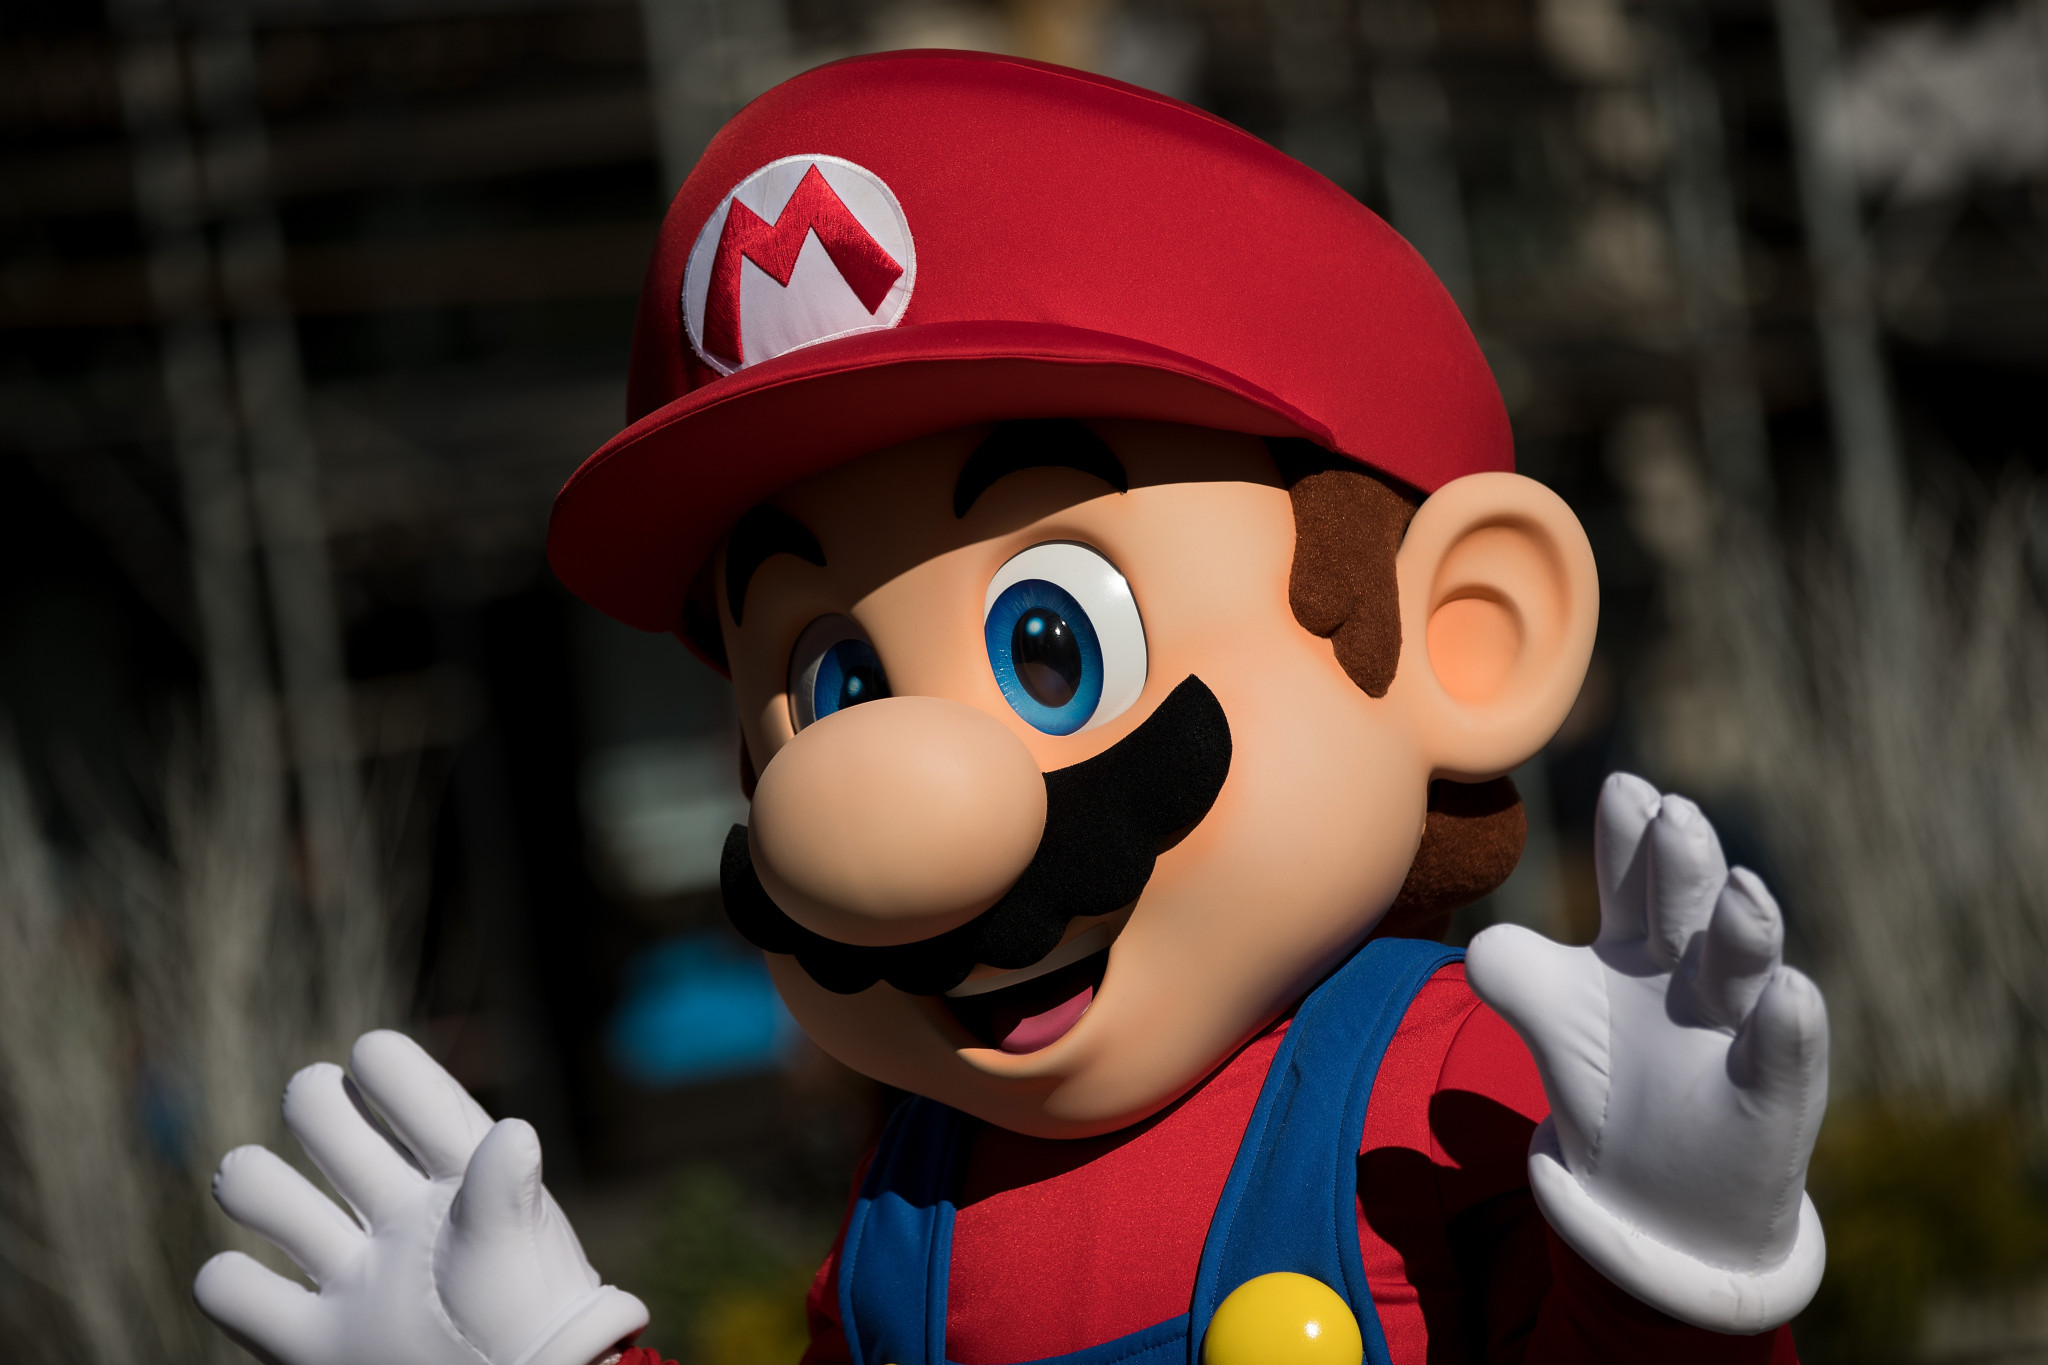 Super profit surge for Mario the plumber’s company Nintendo